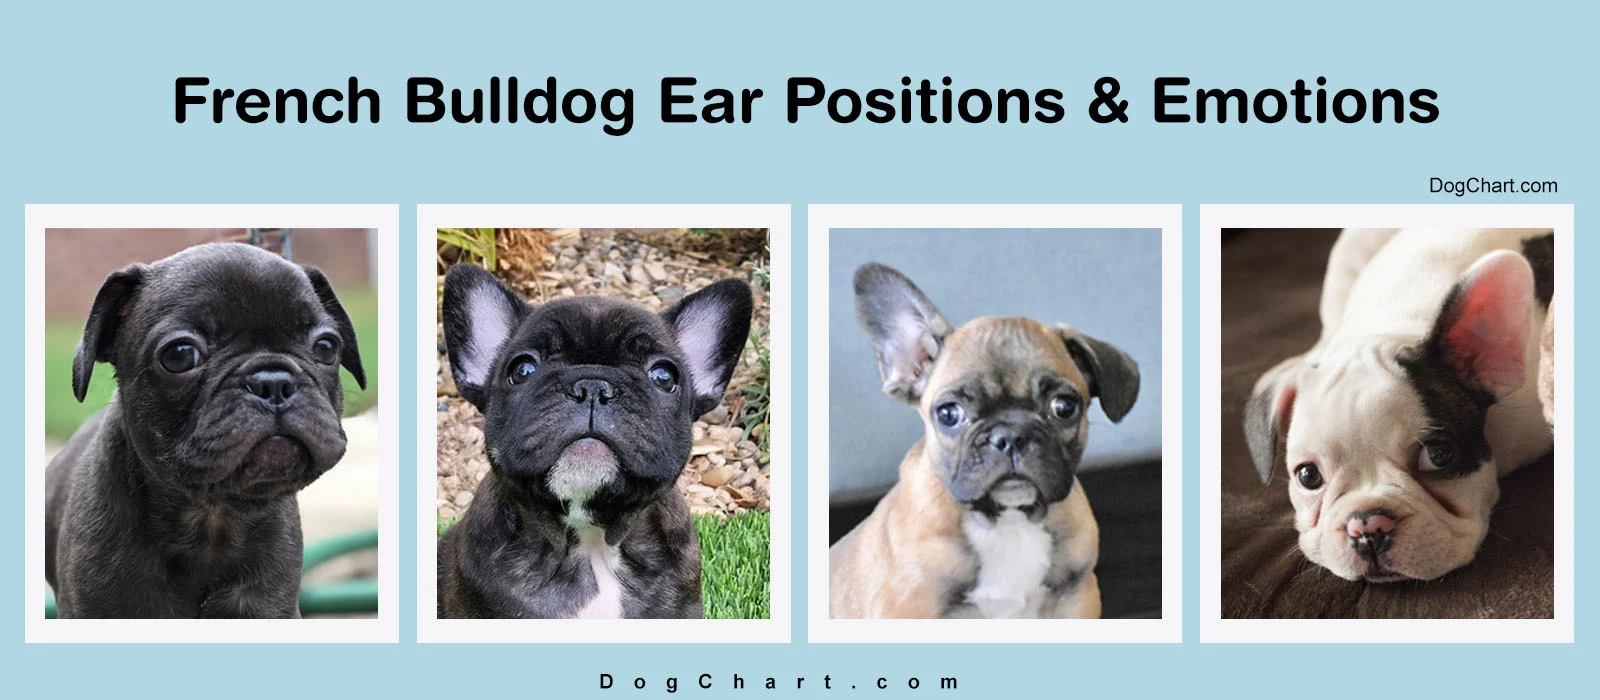 French bulldog ear positions chart